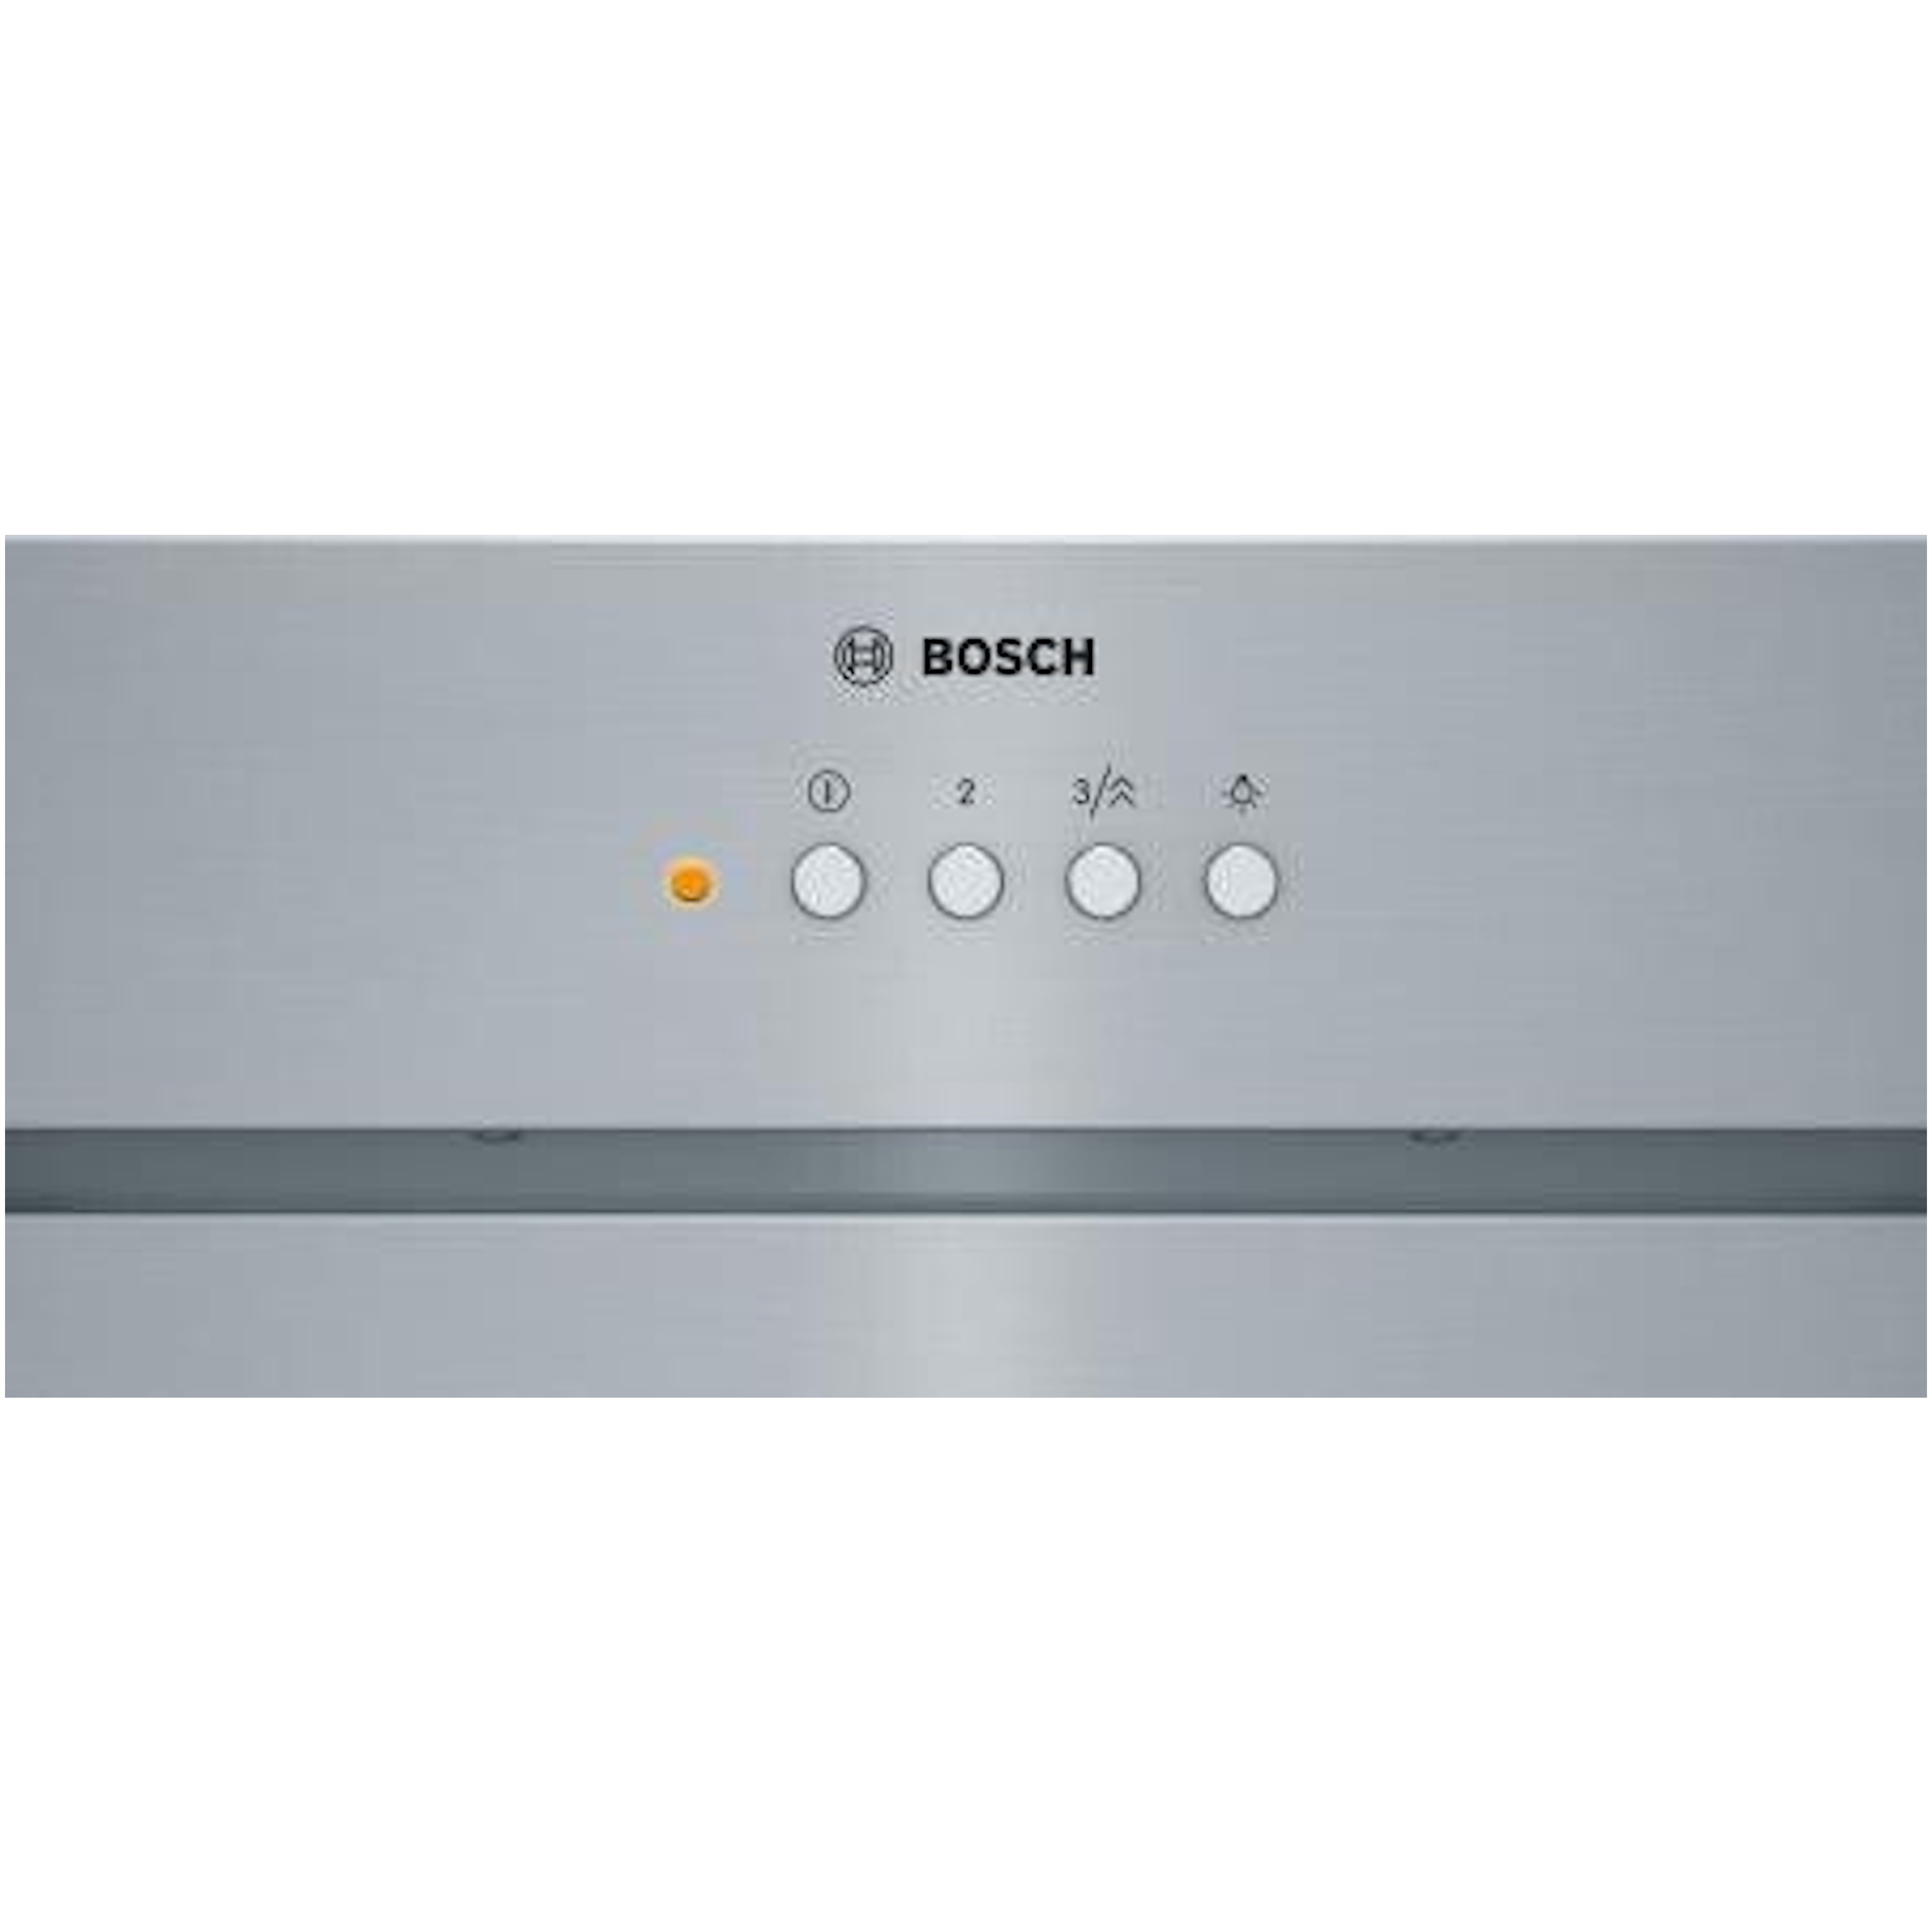 Bosch afzuigkap  DHL885C afbeelding 4